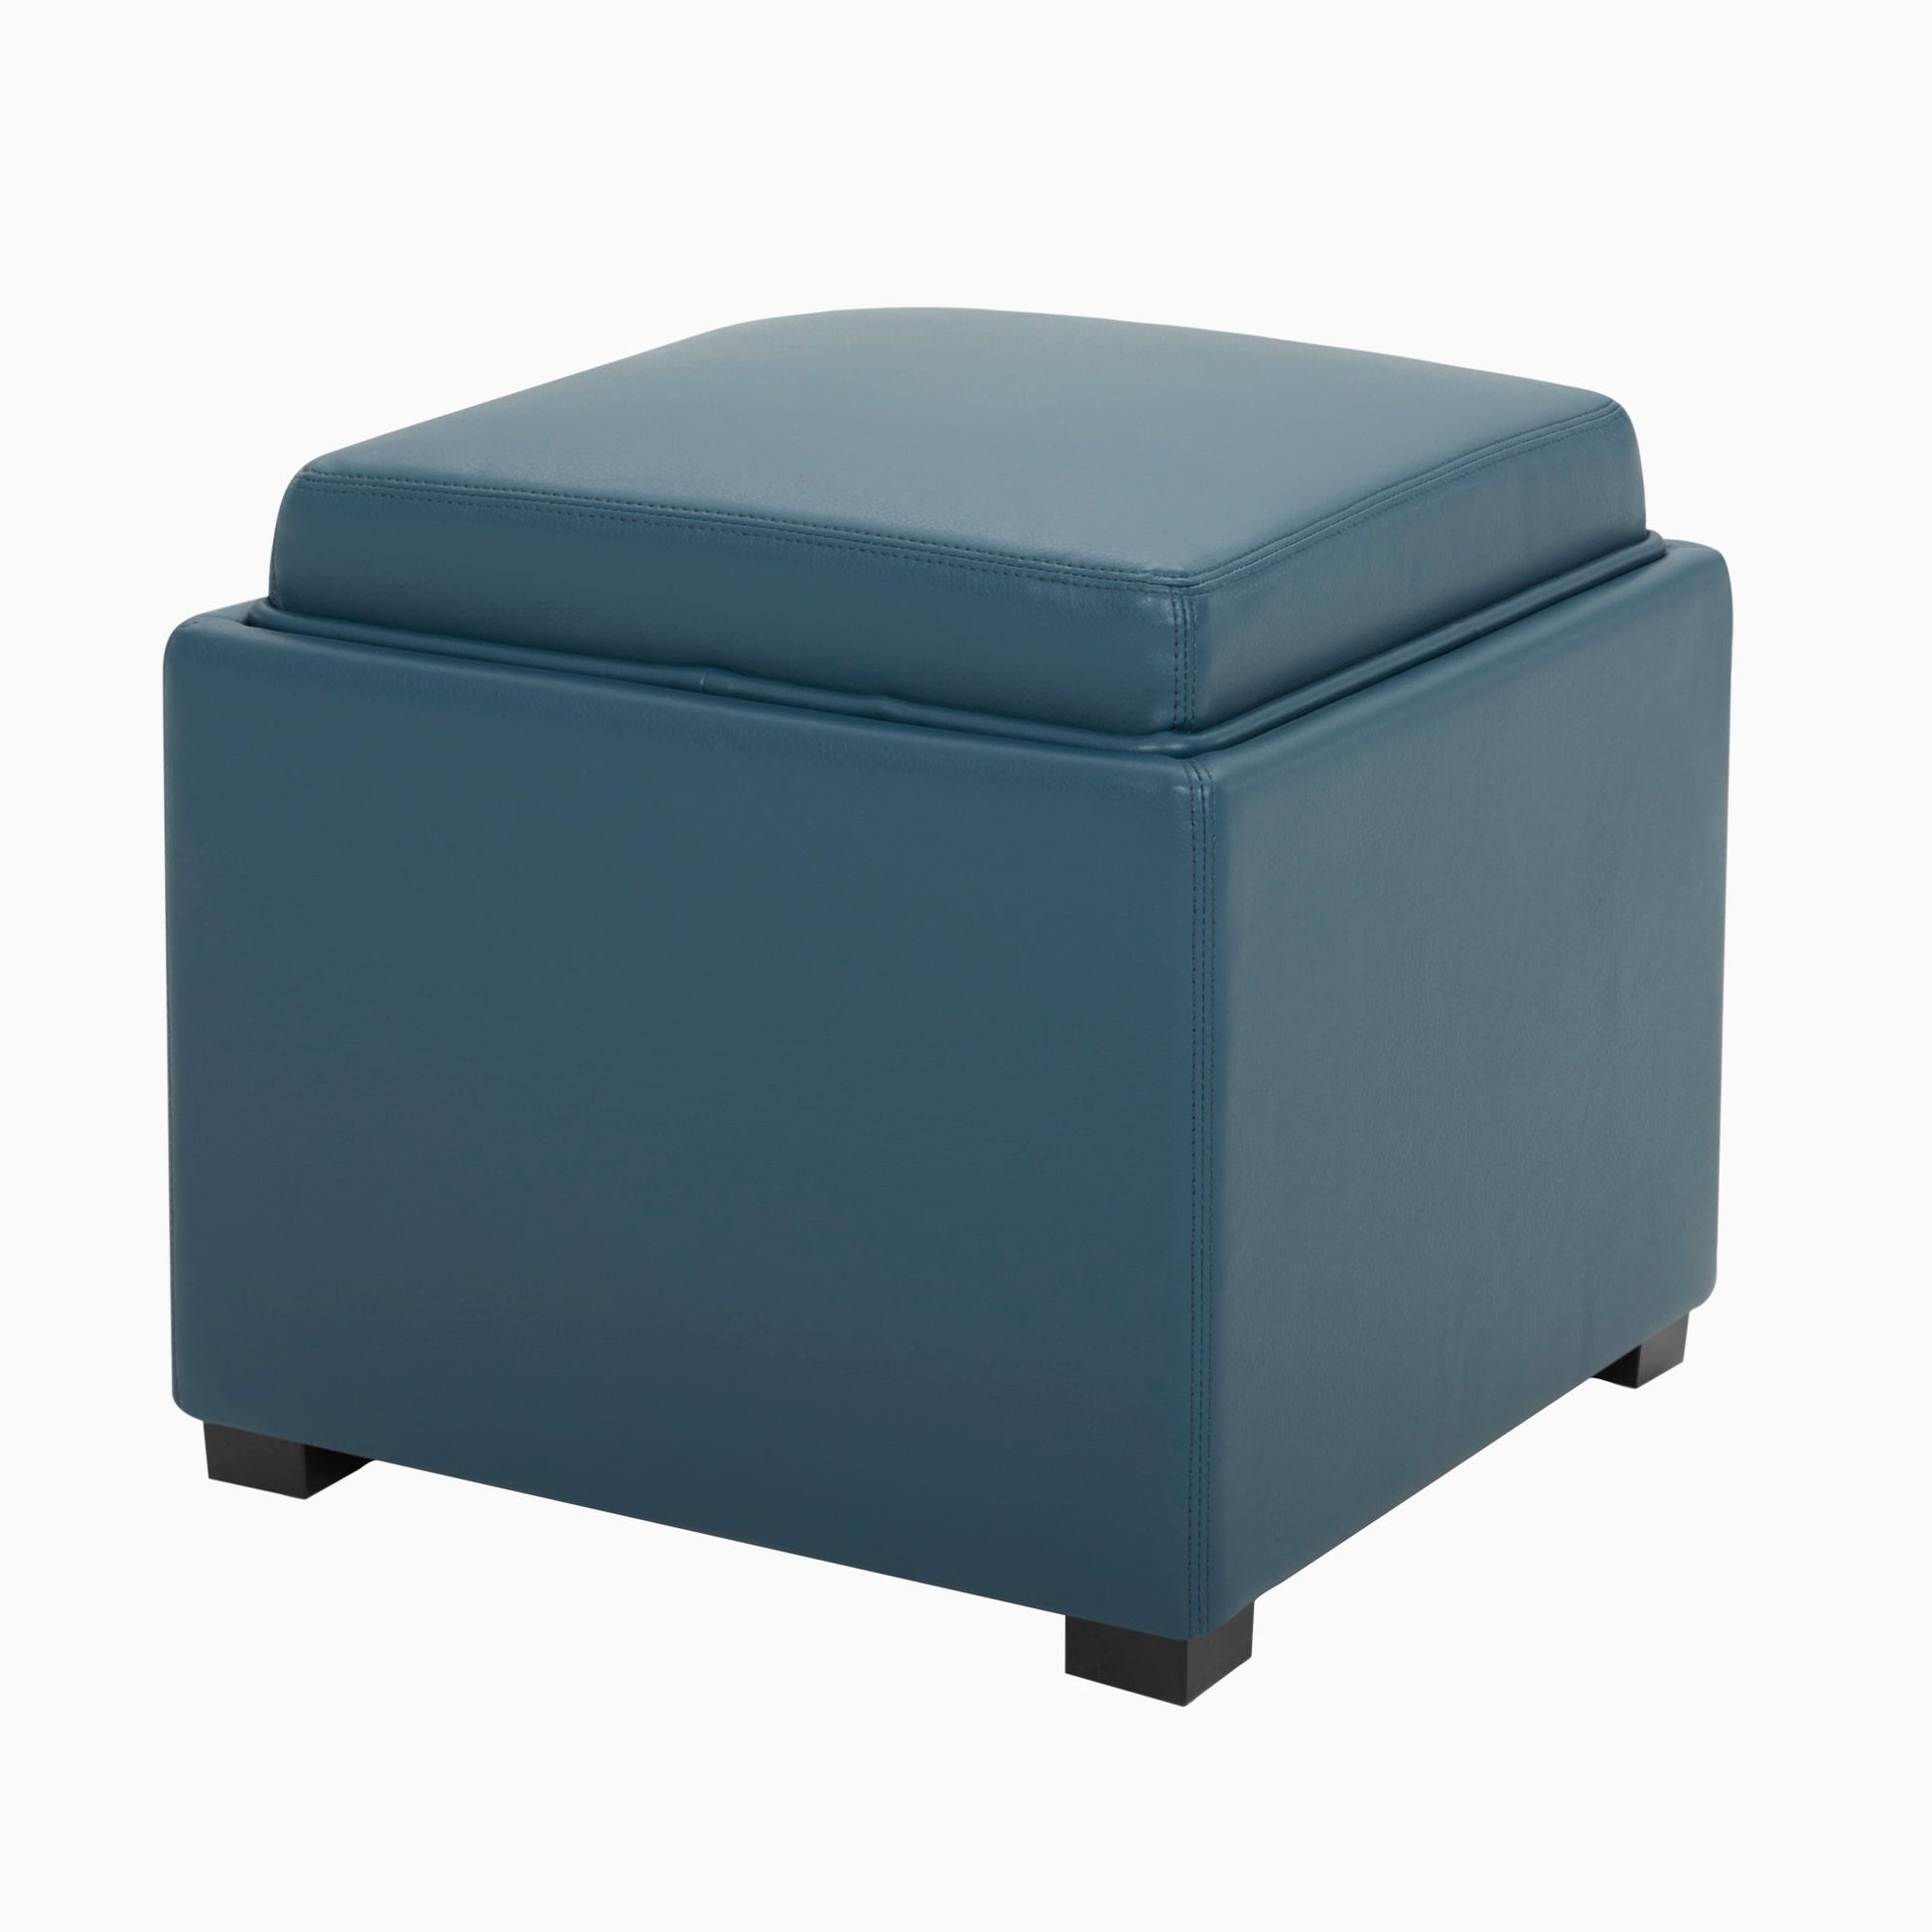 CHITA LIVING-Cube Storage Ottoman - Fabric & Leather-Ottoman-Faux Leather-Blue-